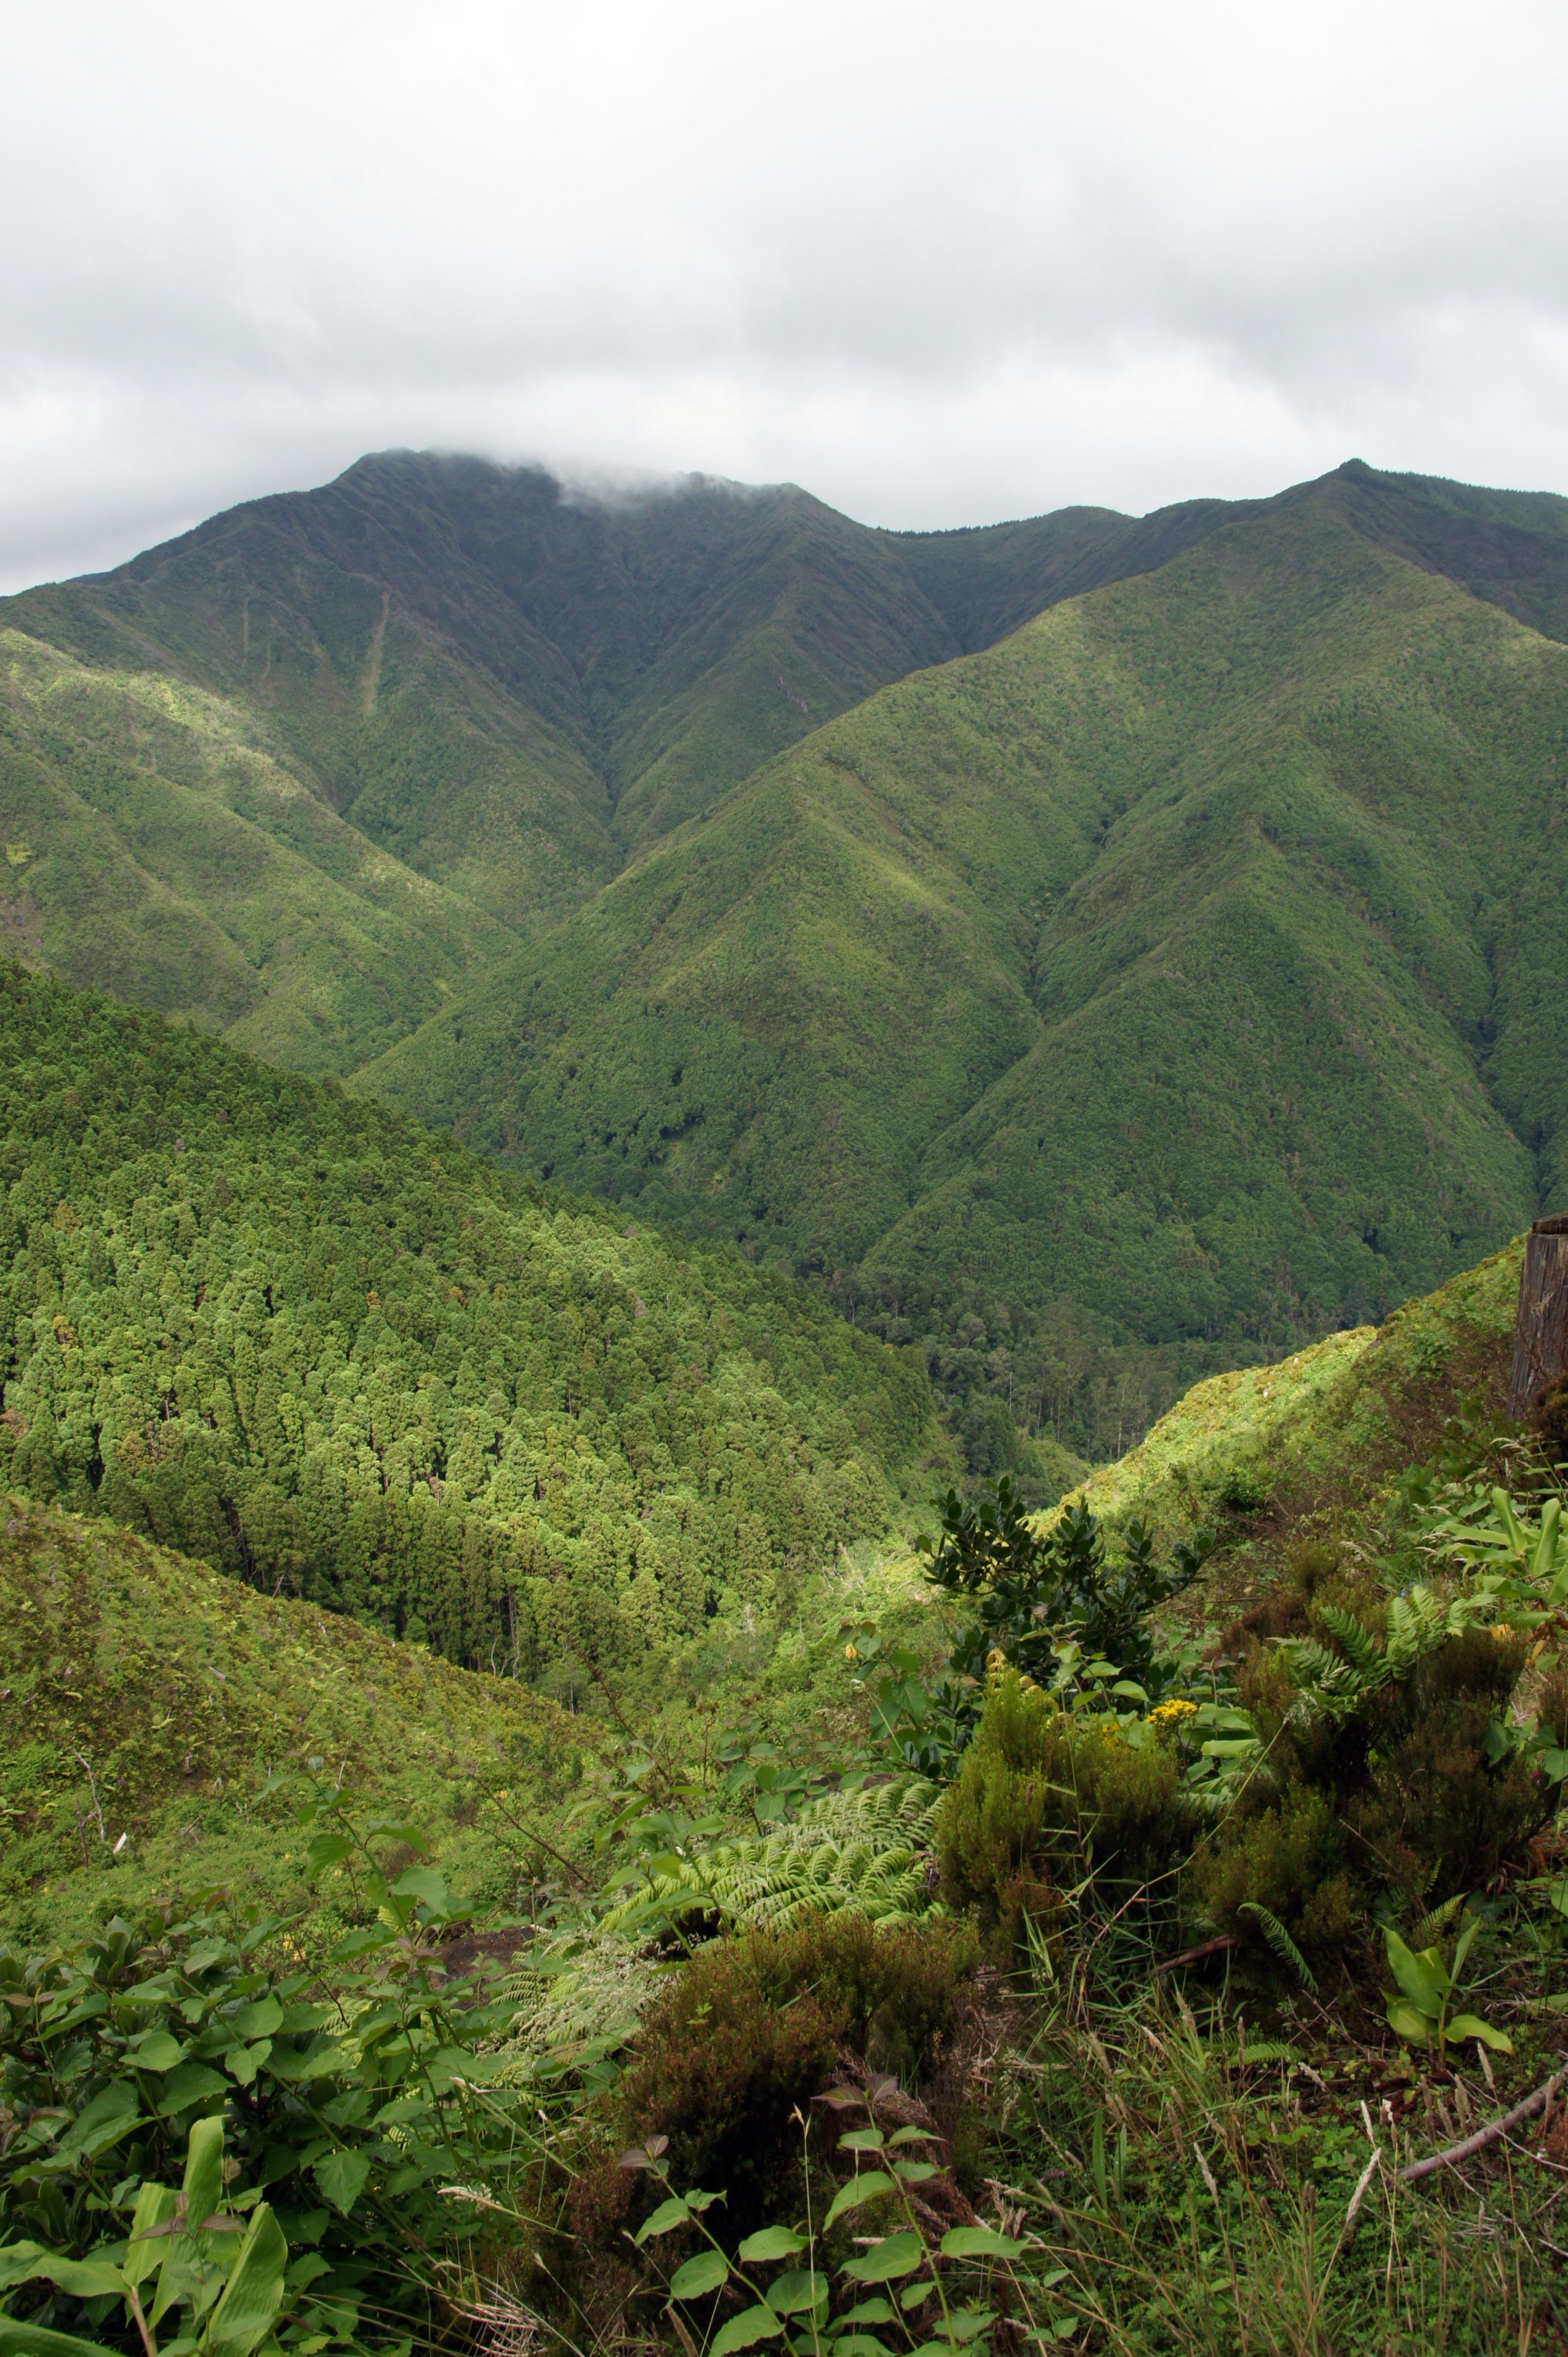 Eastern High Ridge and Pico da Vara
© Flickr user putneymark